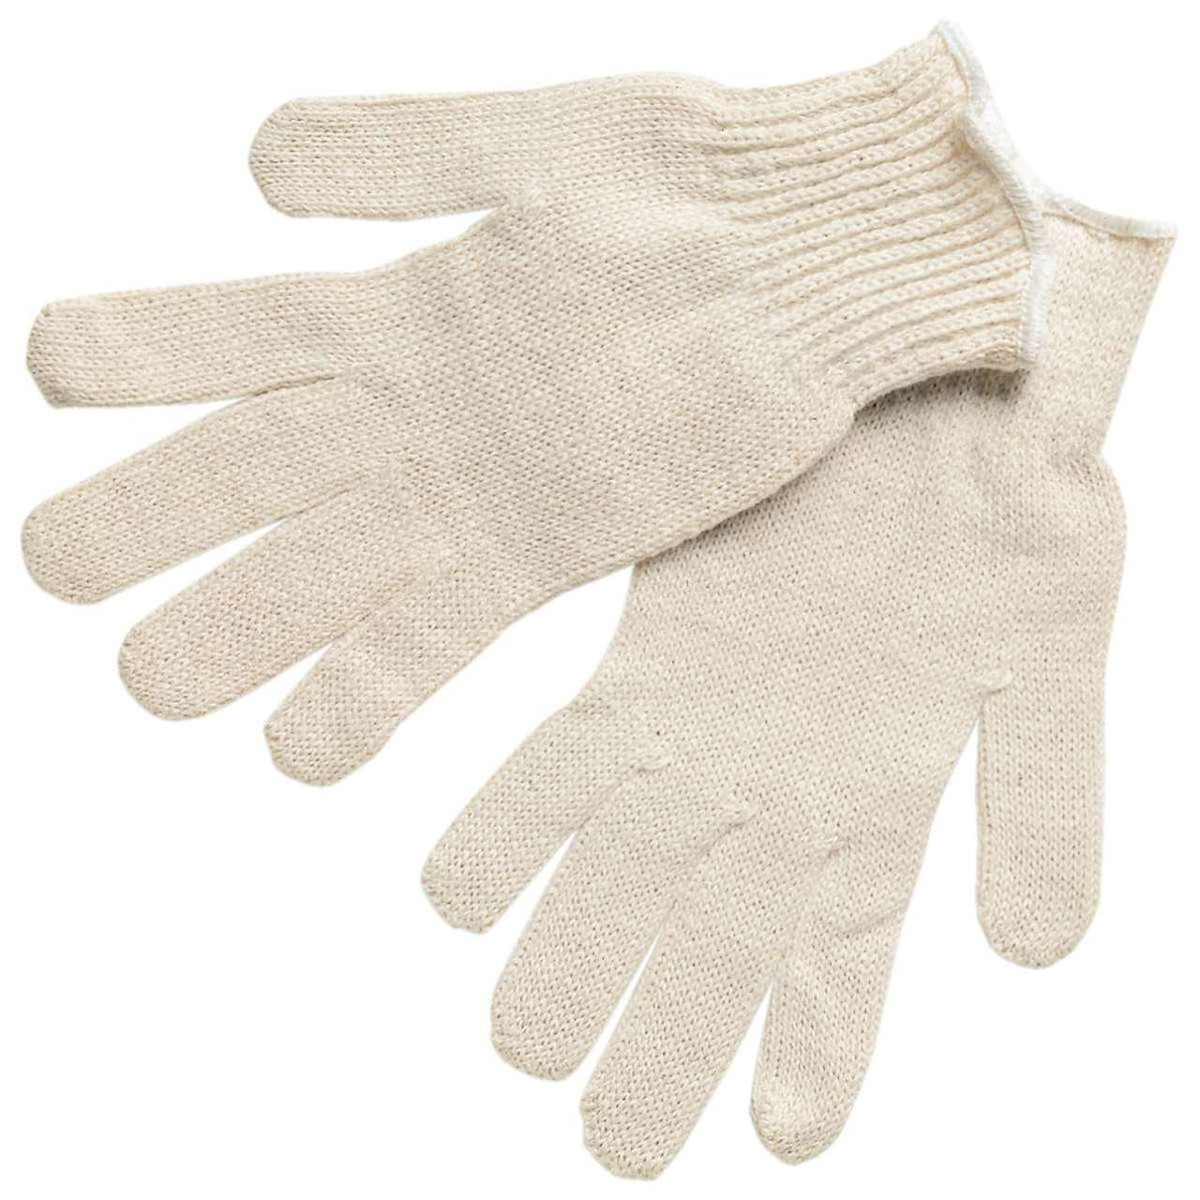 TASK 13G Hi-Vis Polyurethane Coated Gloves - MH8130HY - Single Pair